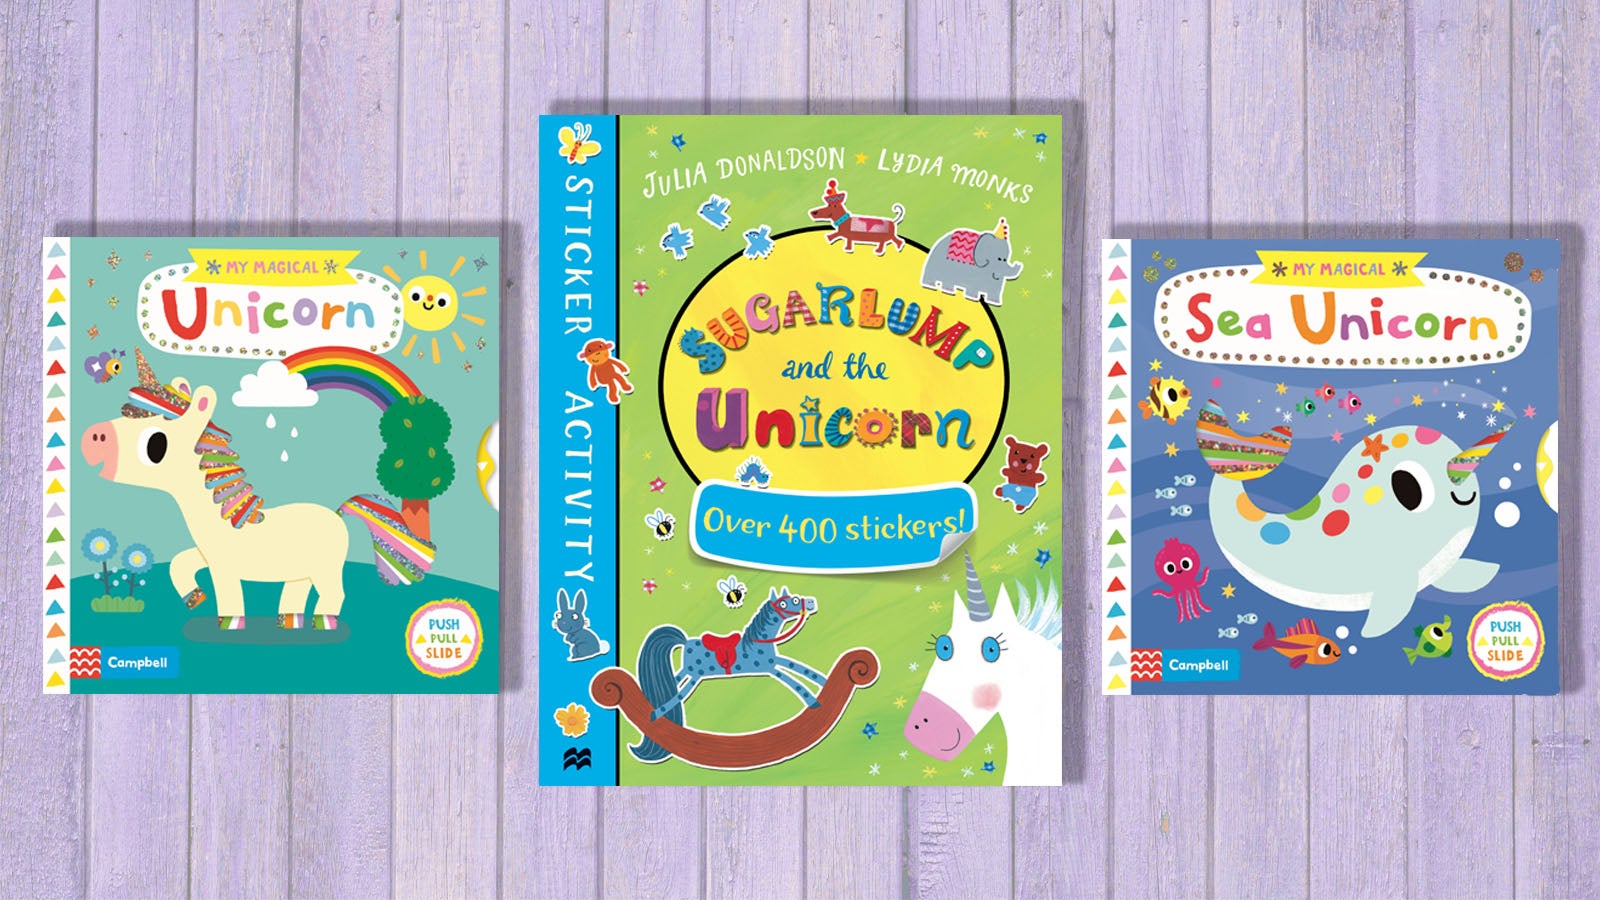 Children's books about unicorns